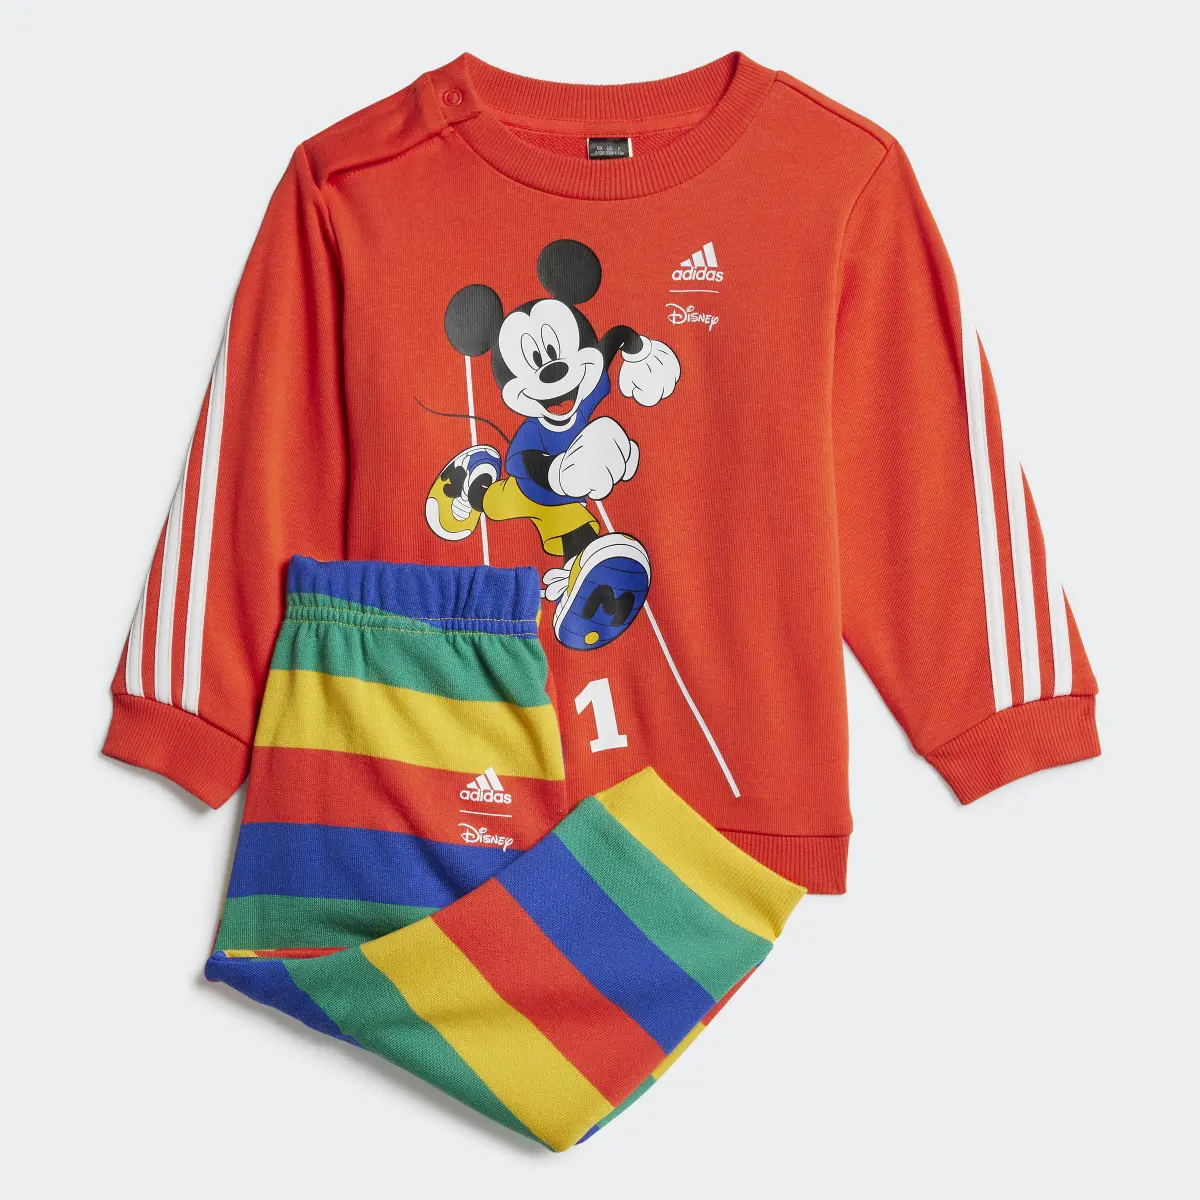 Adidas x Disney Mickey Mouse Jogger. 2